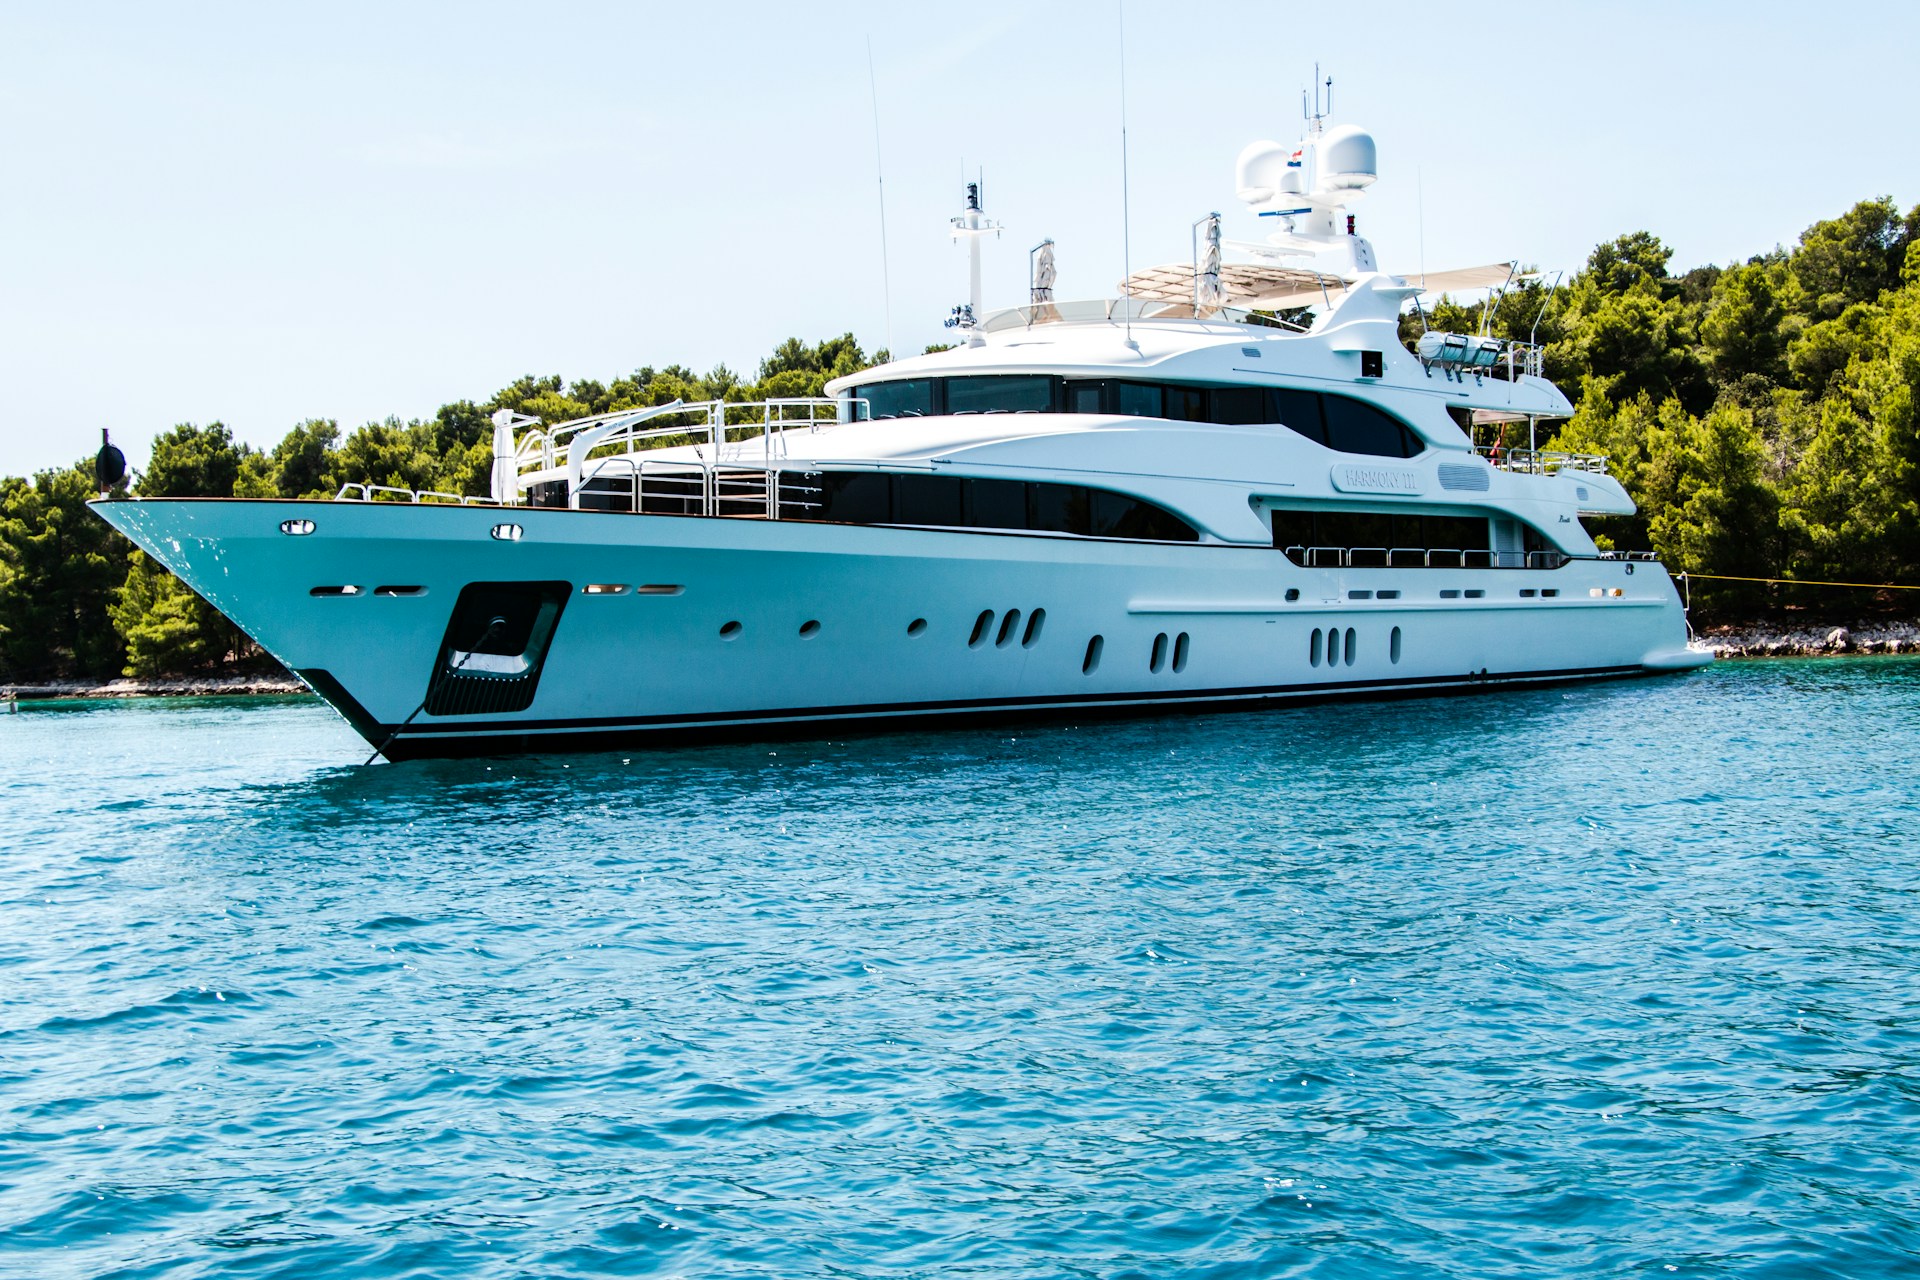 Indulgence afloat: Mind-blowing luxury yacht amenities